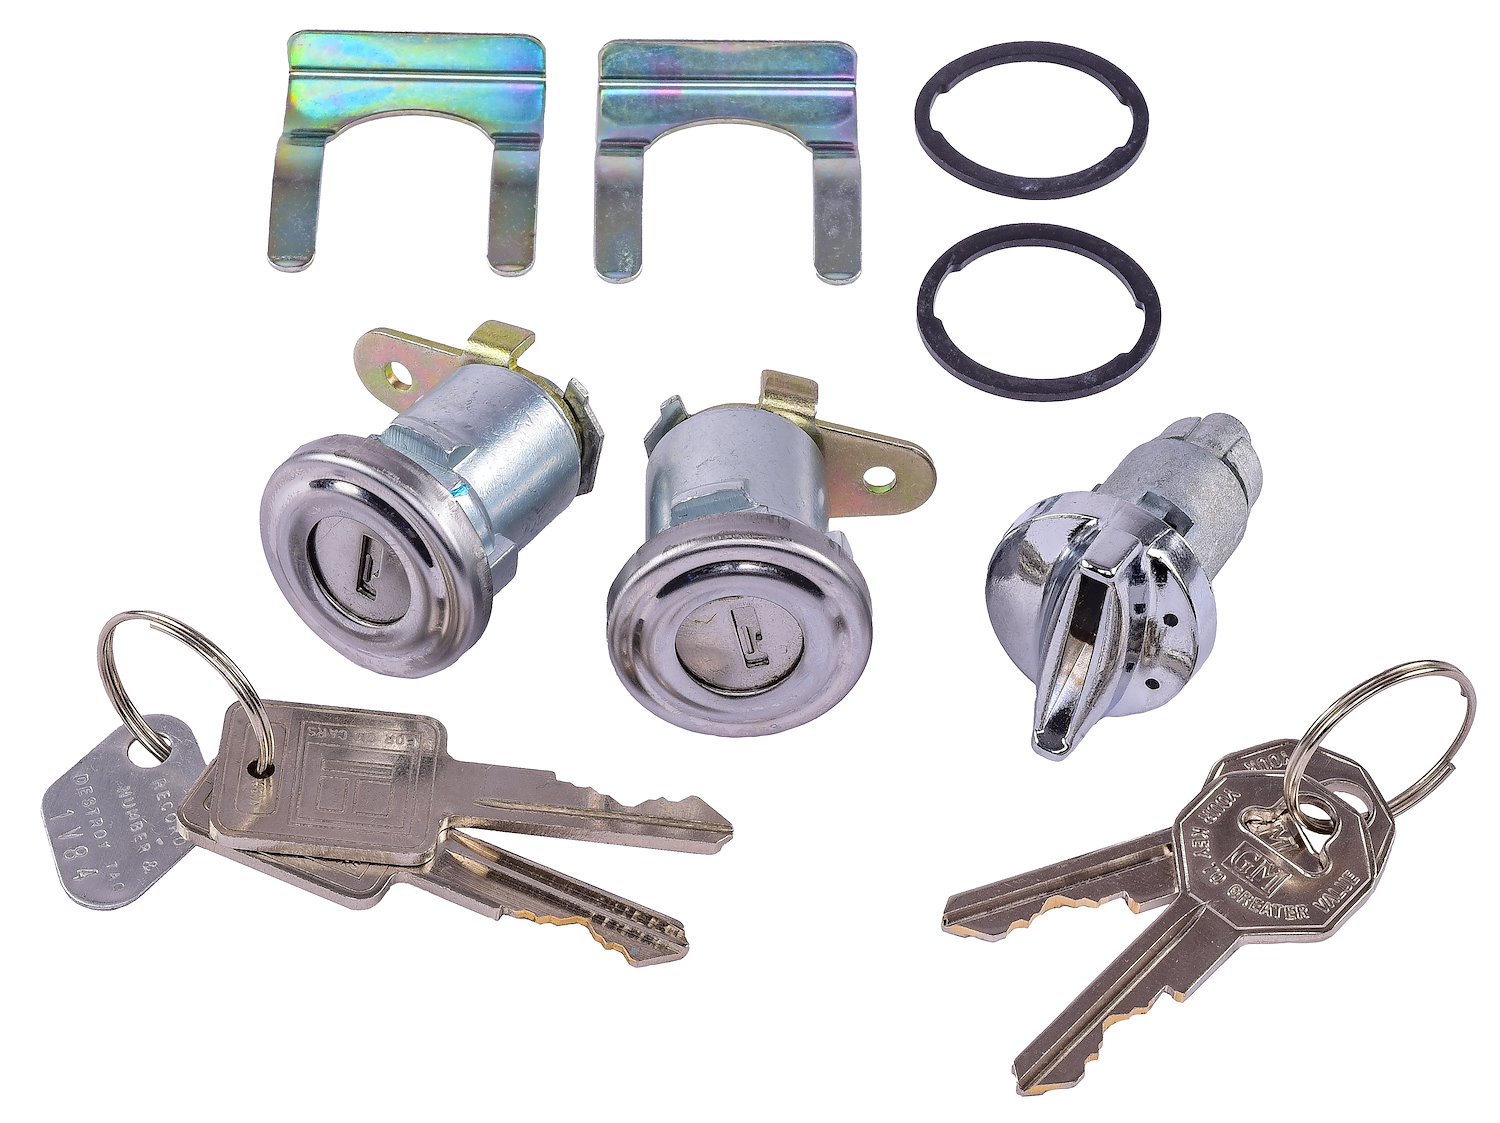 Ignition & Door Lock Set Fits Select 1956-1957 GM Models [Original Octagon Keys]